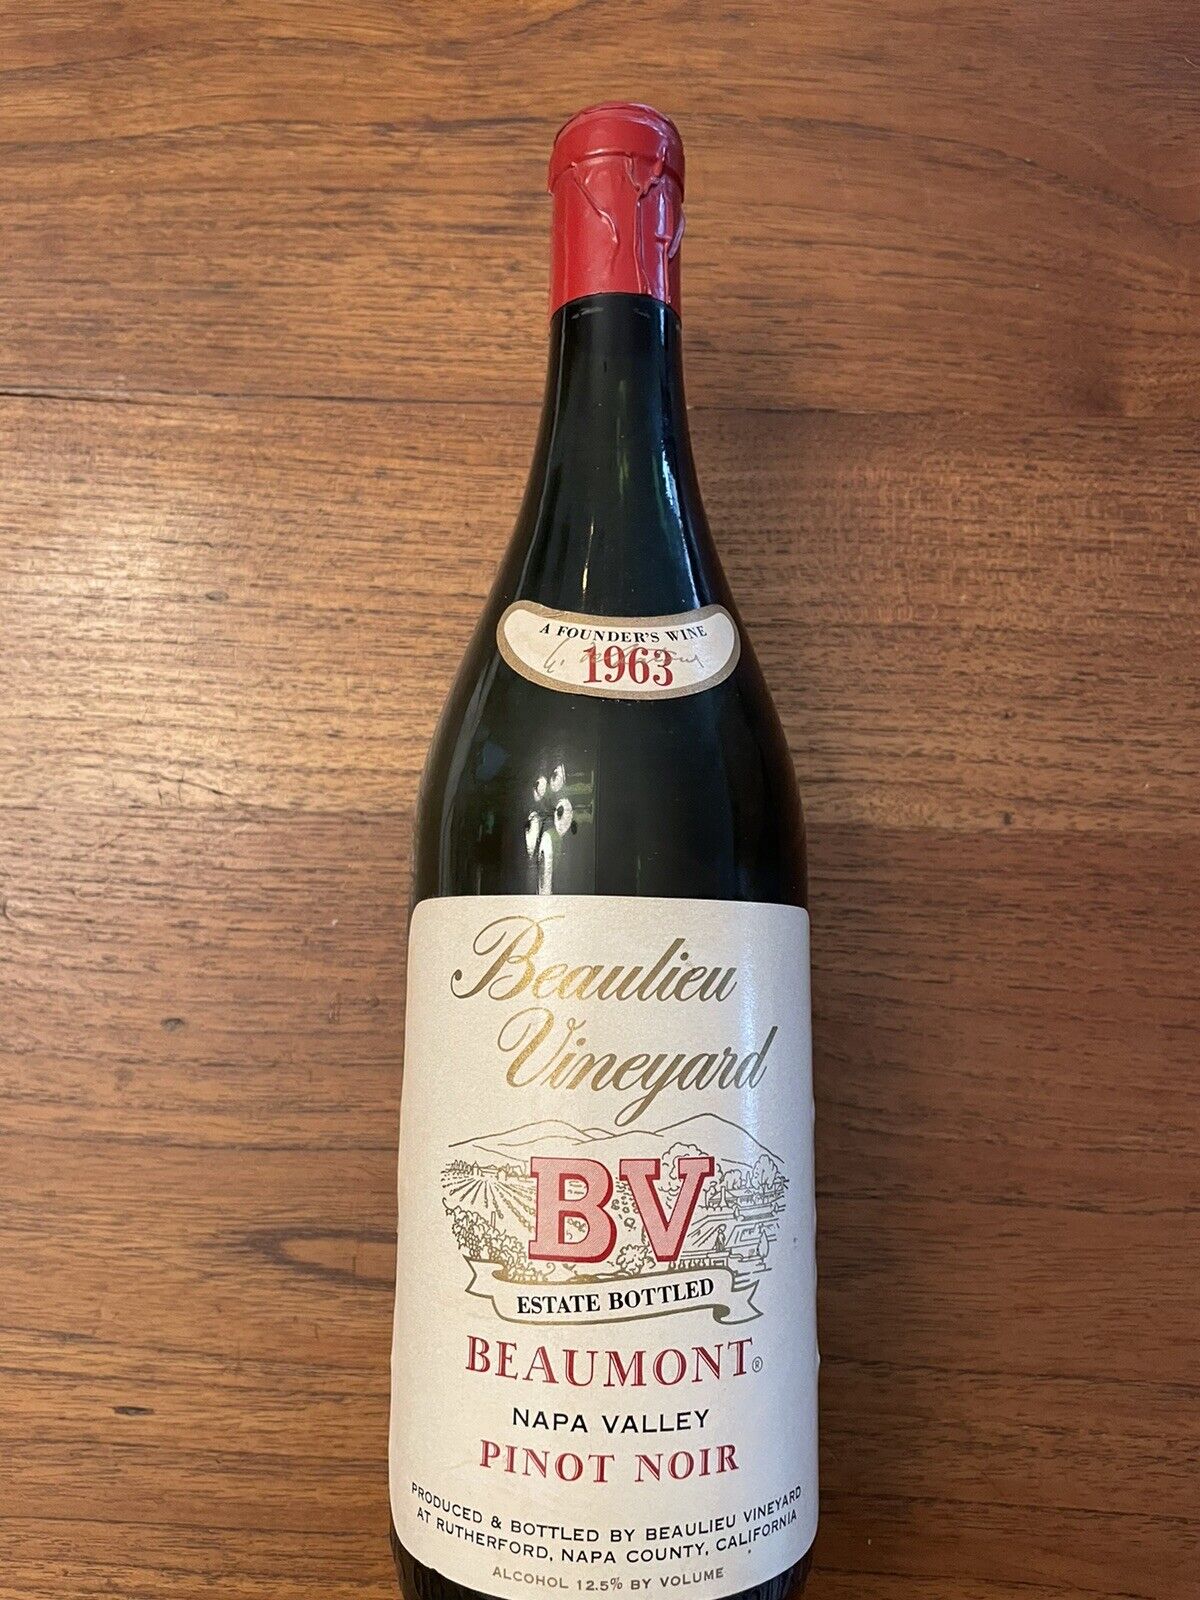 1963 Vintage Beaulieu Vineyard Beaumont Napa Valley Pinot Noir EMPTY wine bottle